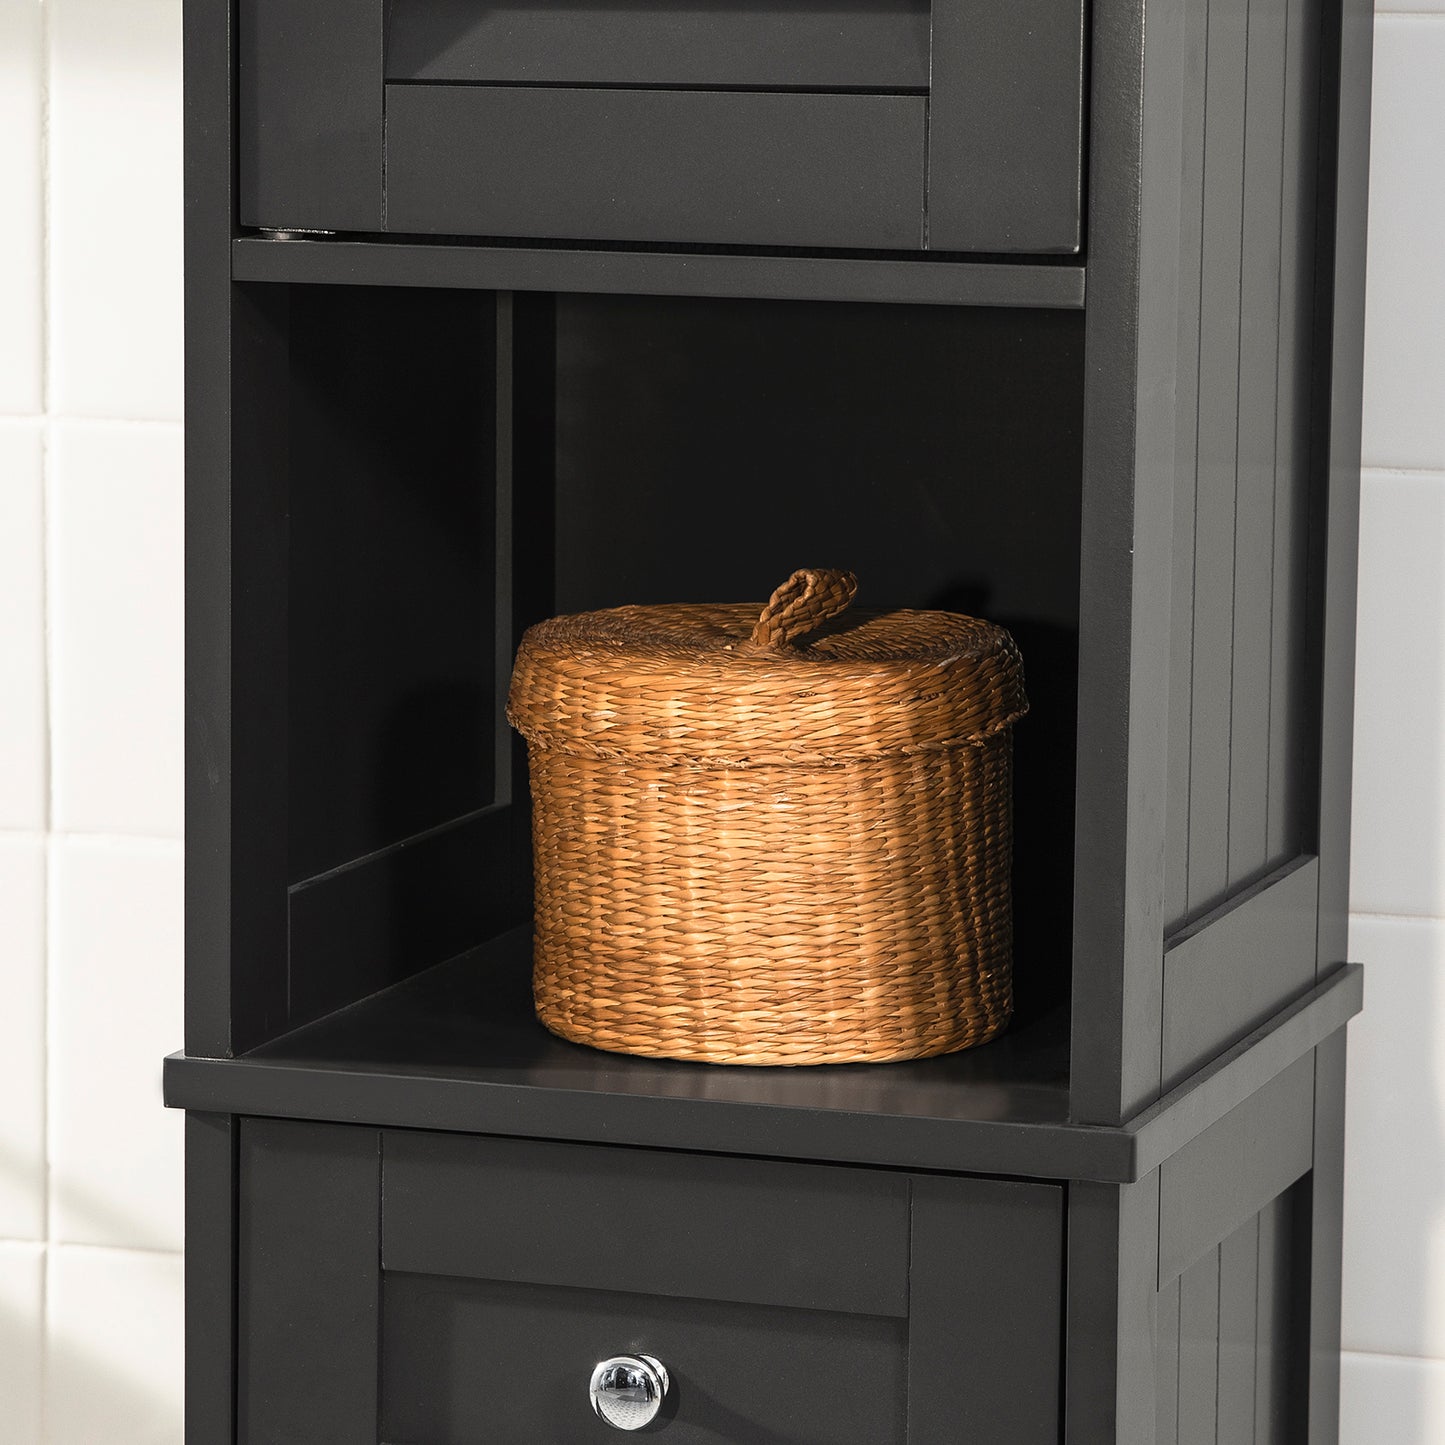 SoBuy FRG236-DG Tall Bathroom Cabinet with Shelf and Drawer, Tall Cupboard, Dark Grey Tall Cabinet